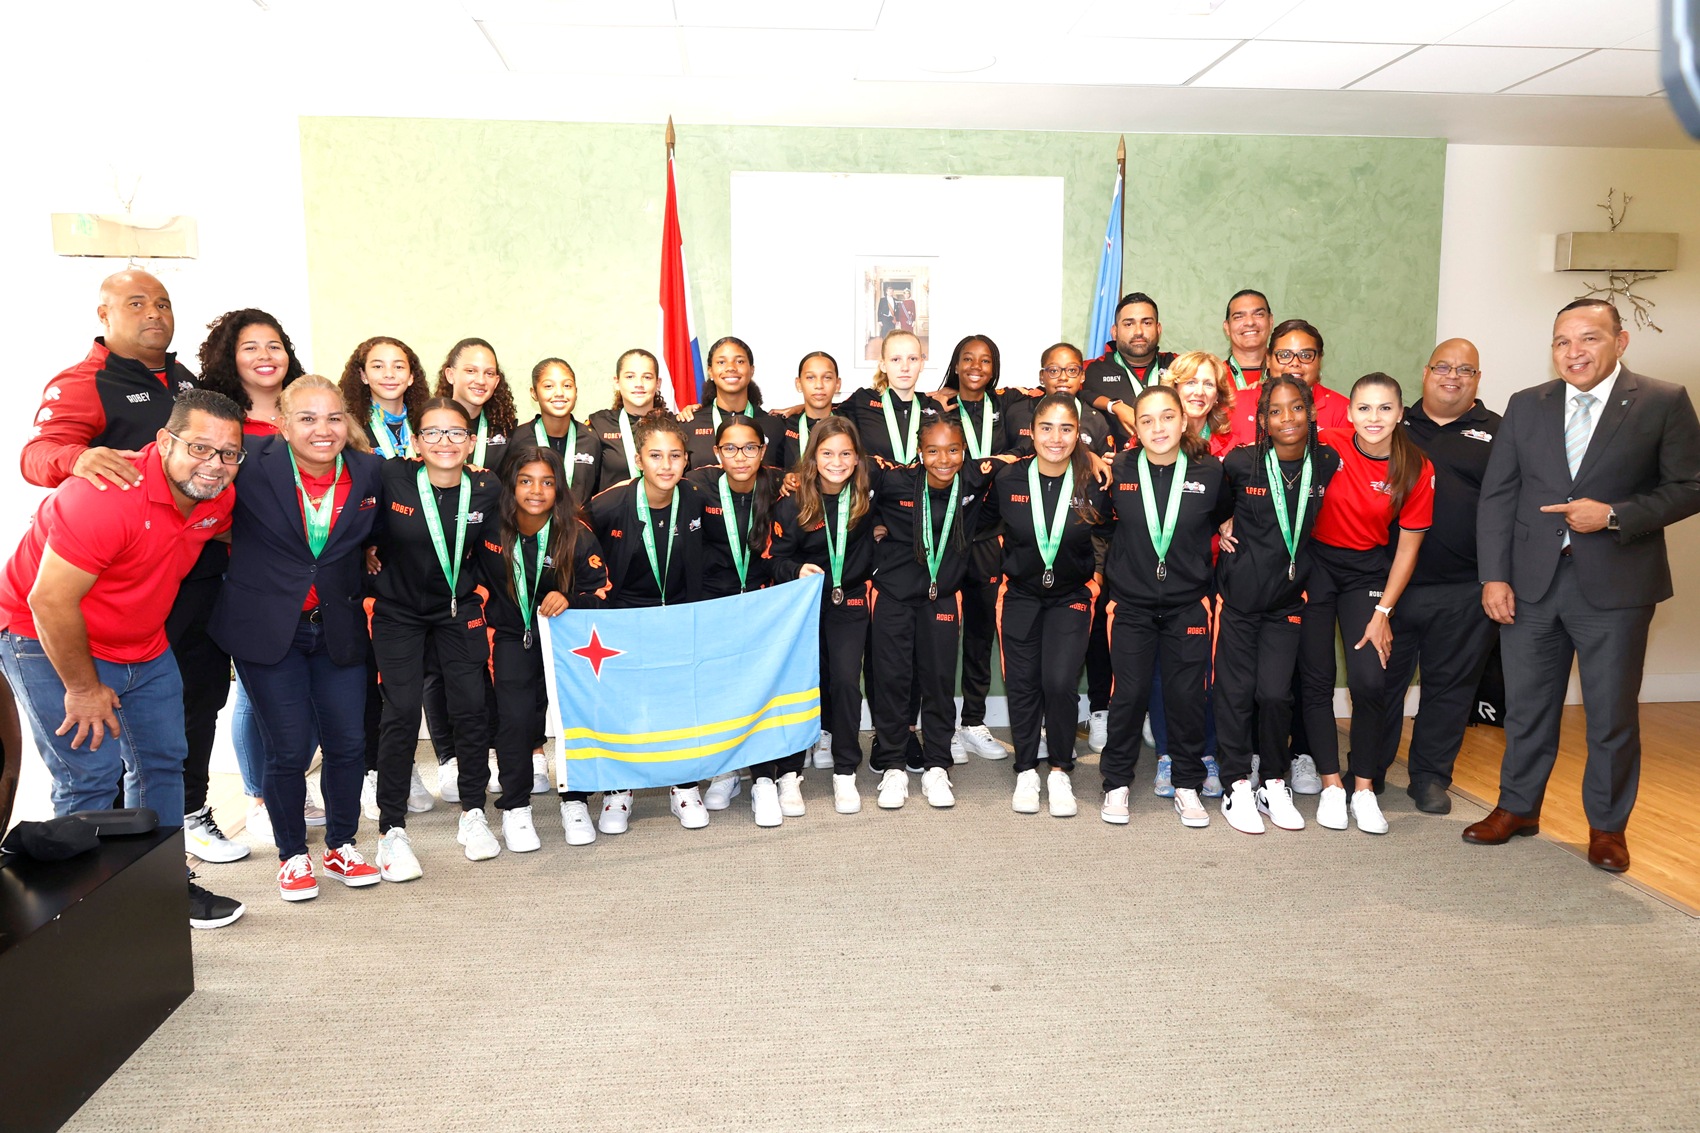 Hopi alegria na yegada di e seleccion nacional di Girls’ U15 Championship